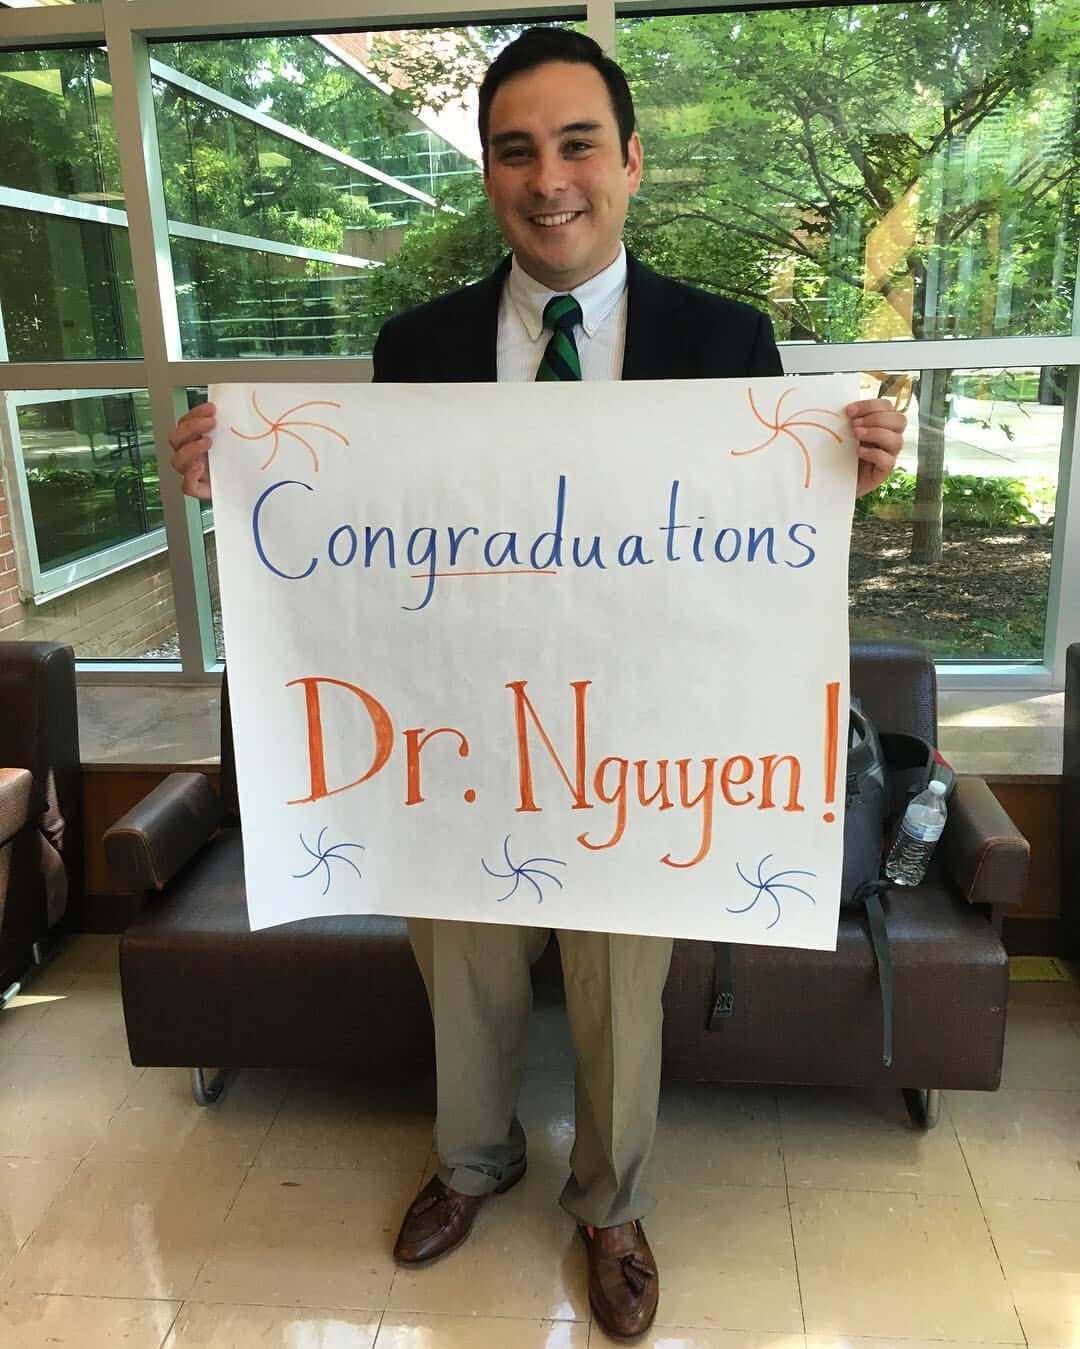 Dr. Nguyen holding sign congratulating him on graduating